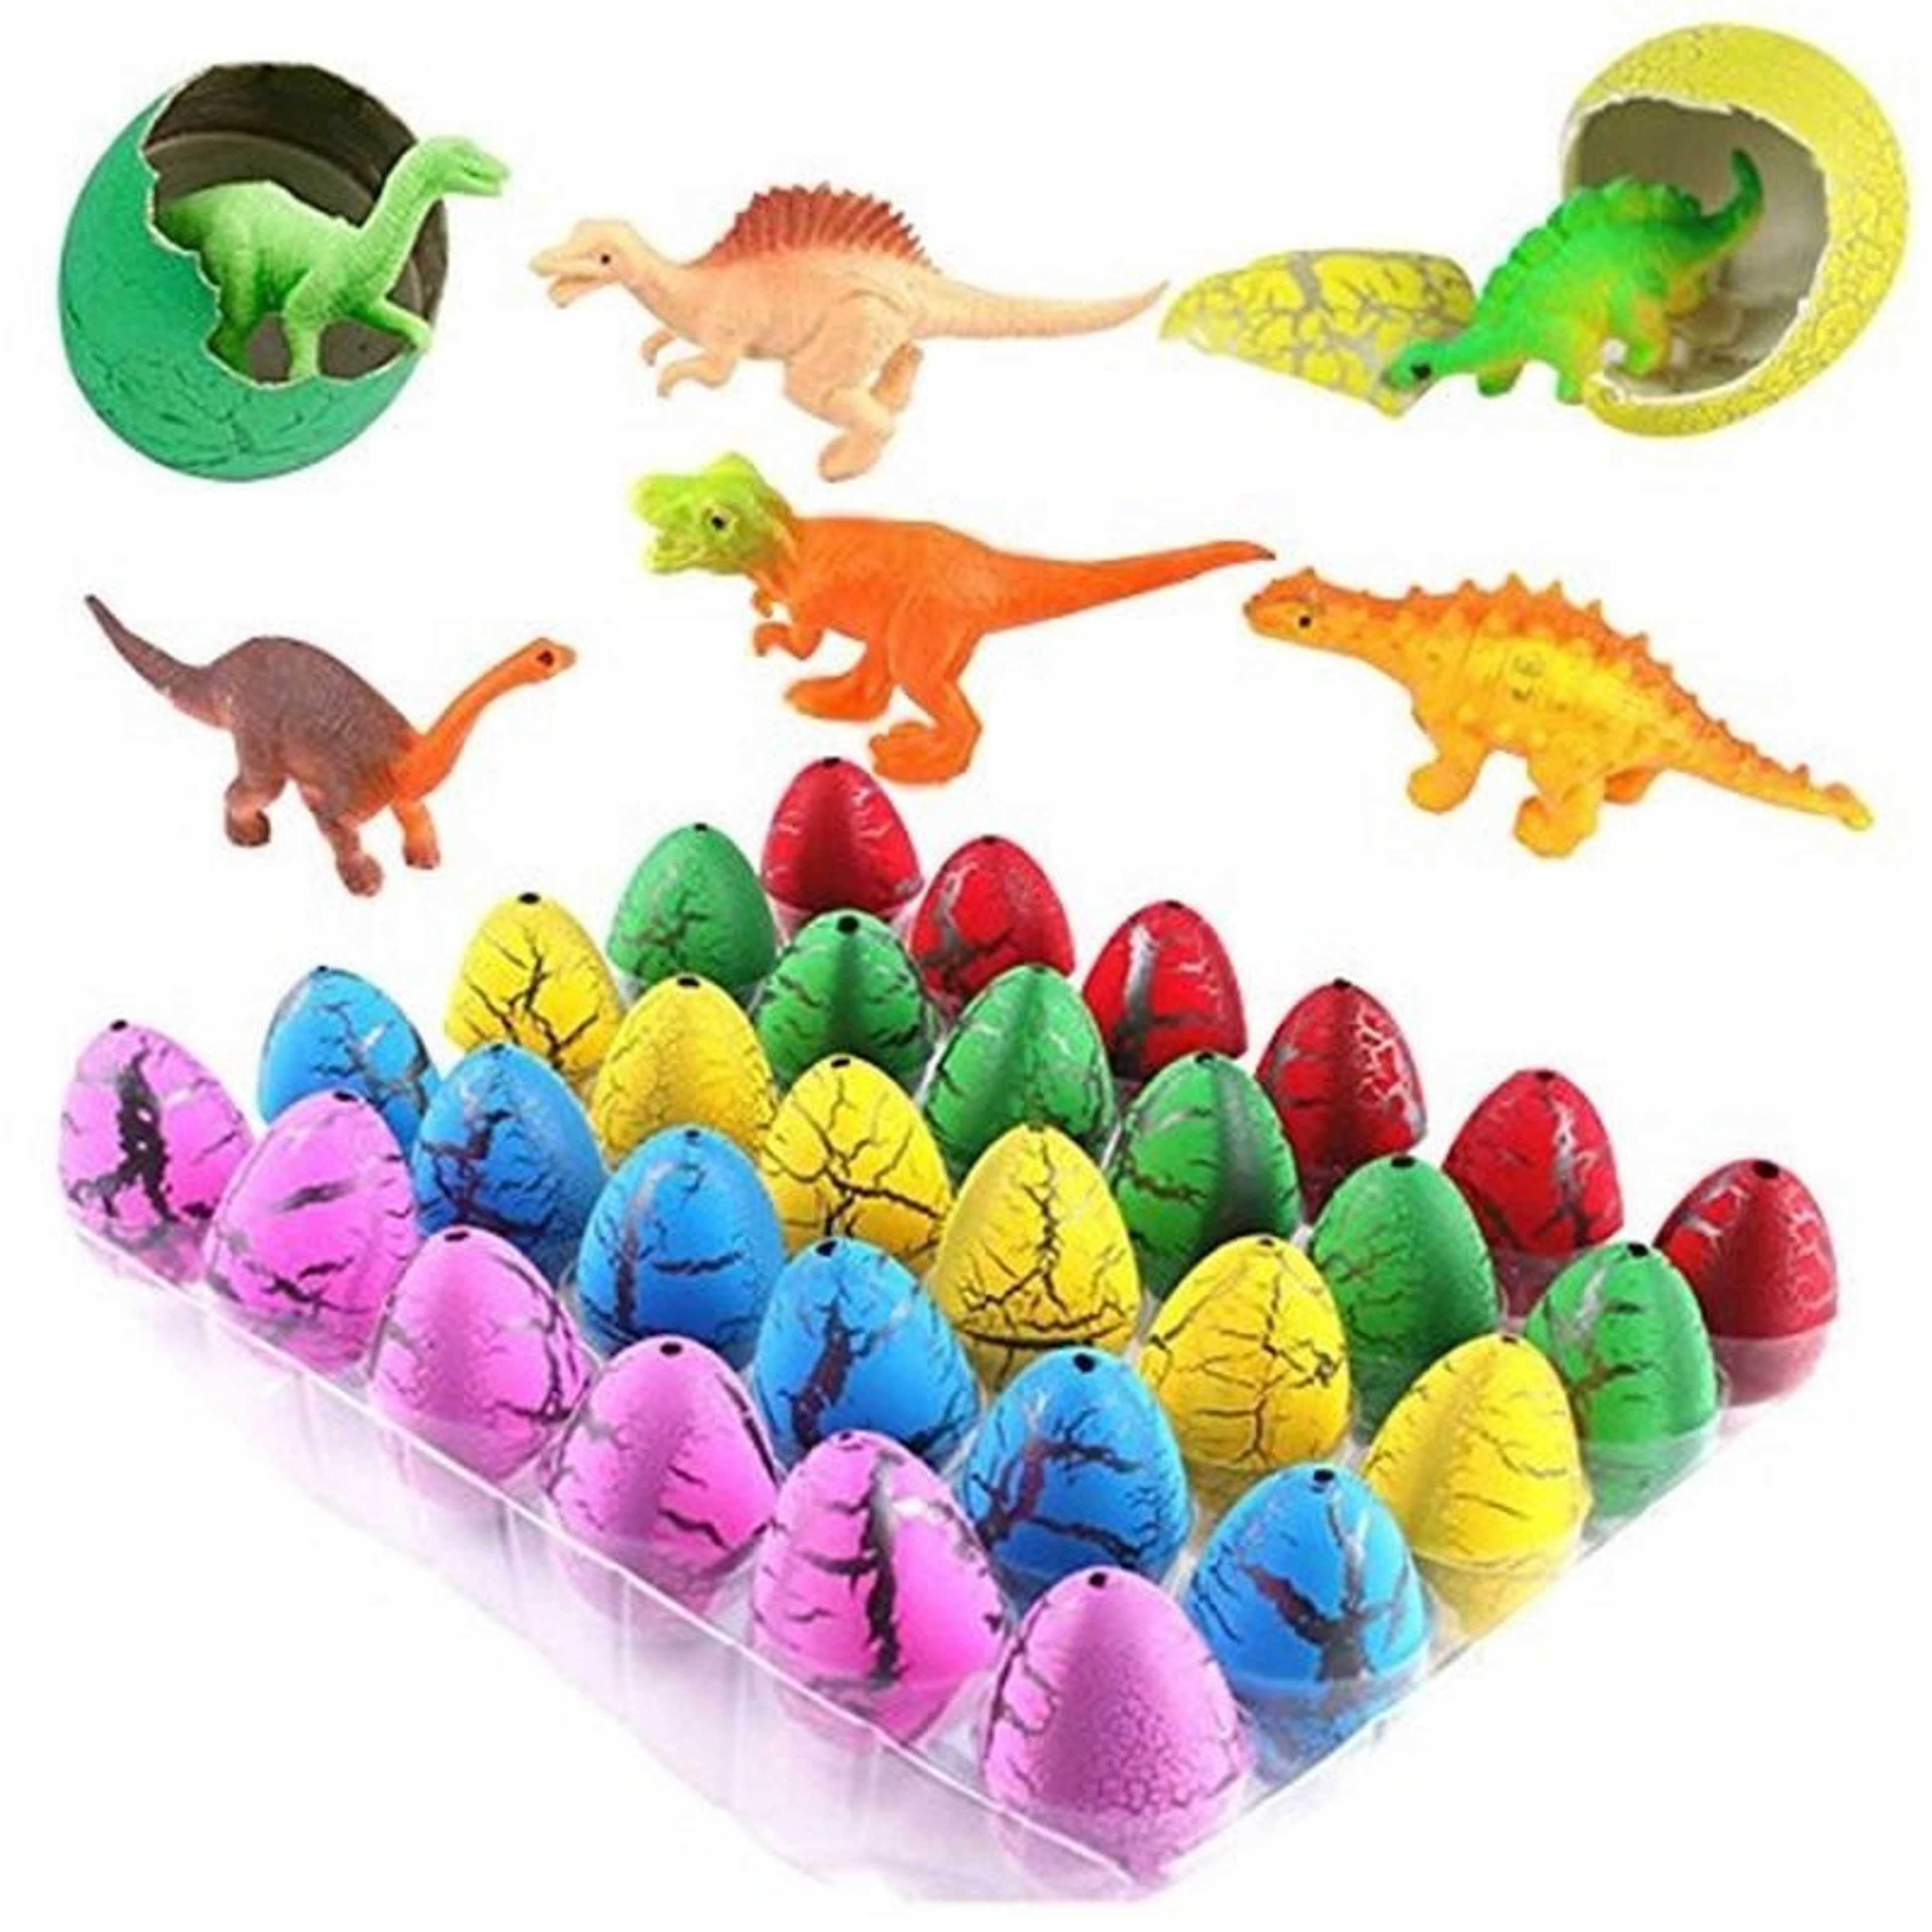 Pack of 30 - Cute Magic Hatching Growing Pet Dinosaur Eggs For Kids